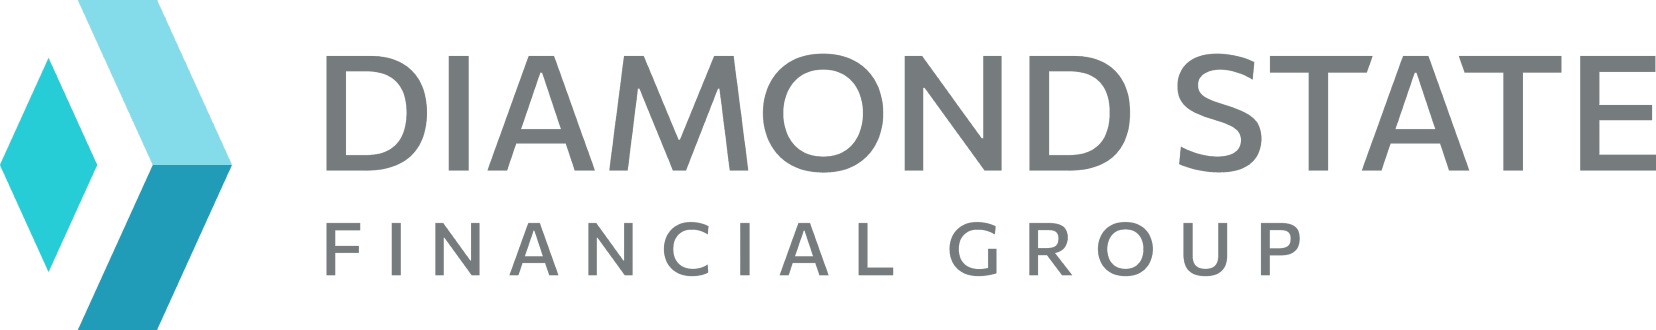 Diamond State Financial Group Company Logo